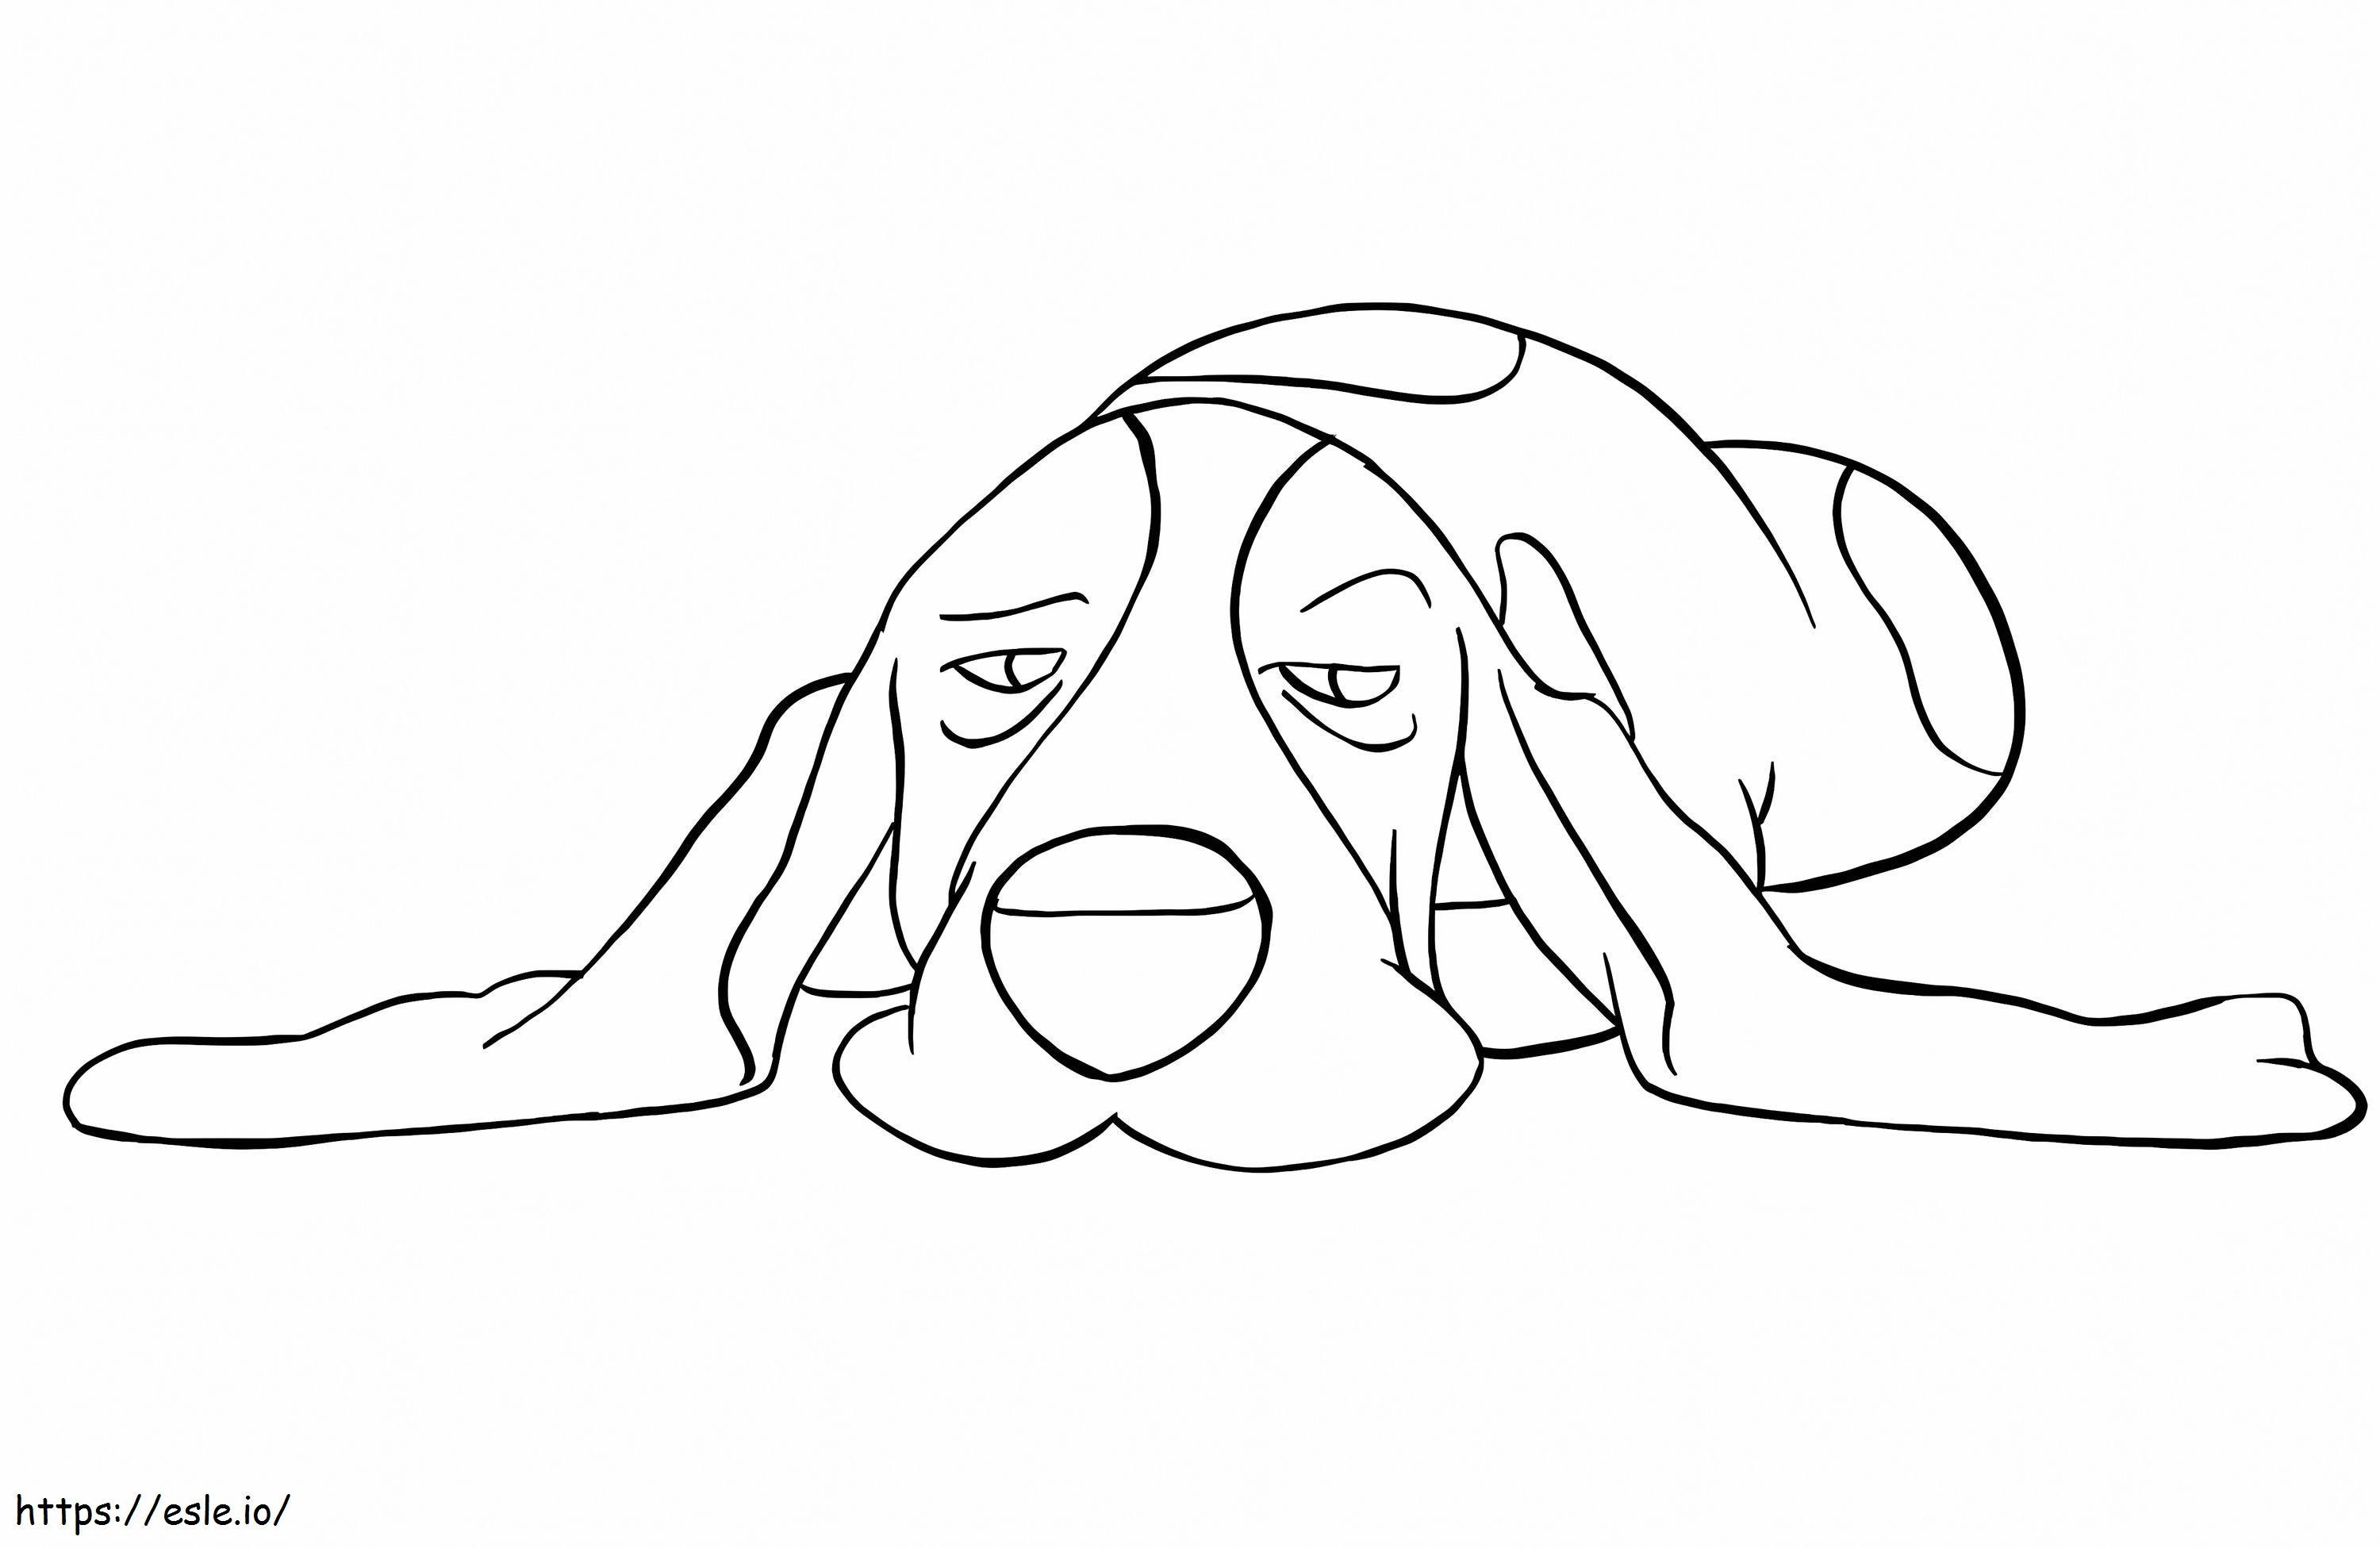 Sleepy Basset Hound coloring page